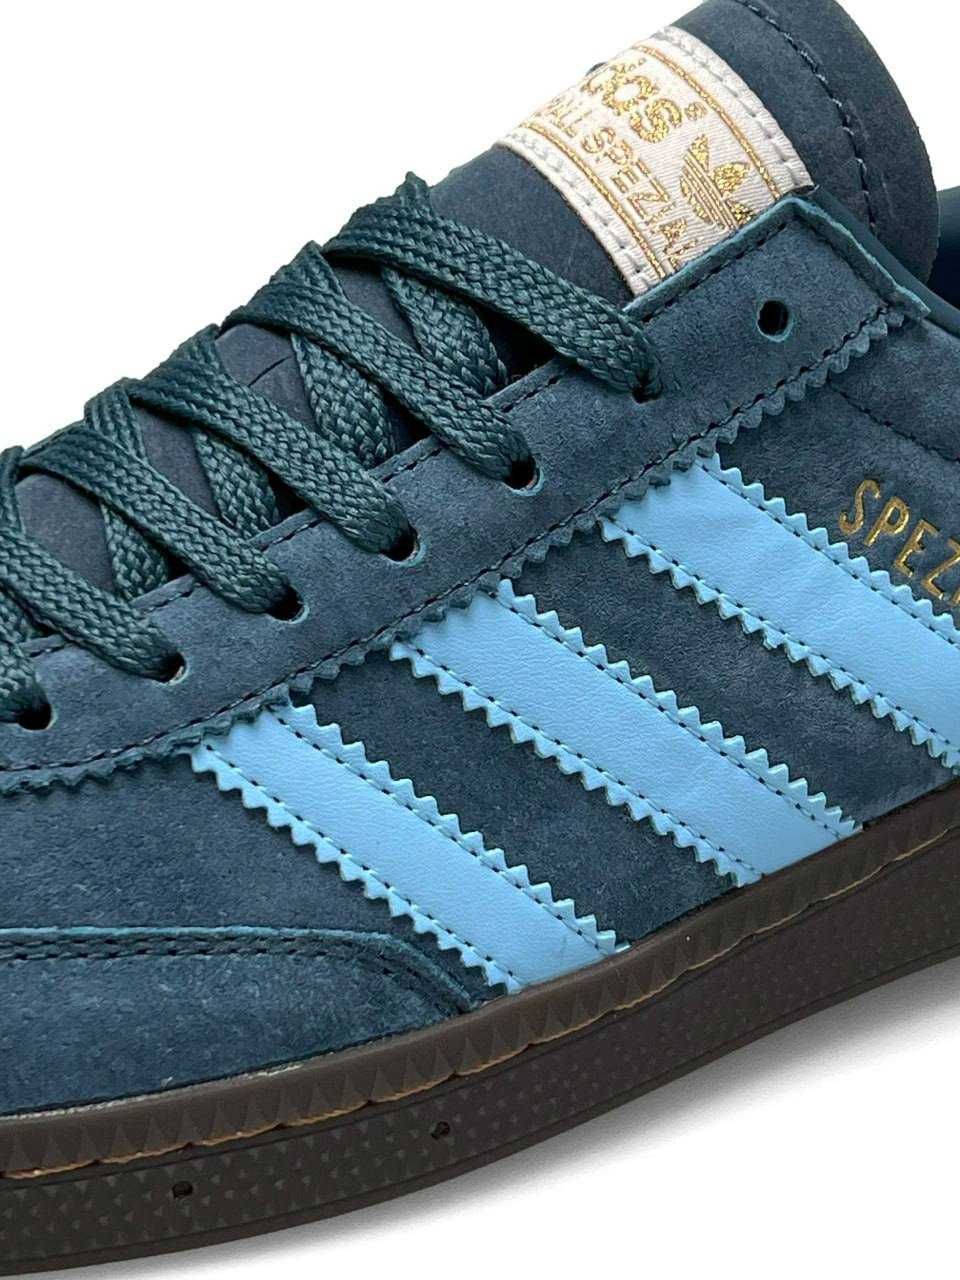 ЗНИЖКА! кросівки Adidas Spezial Navy Blue кеди адідас кроссовки